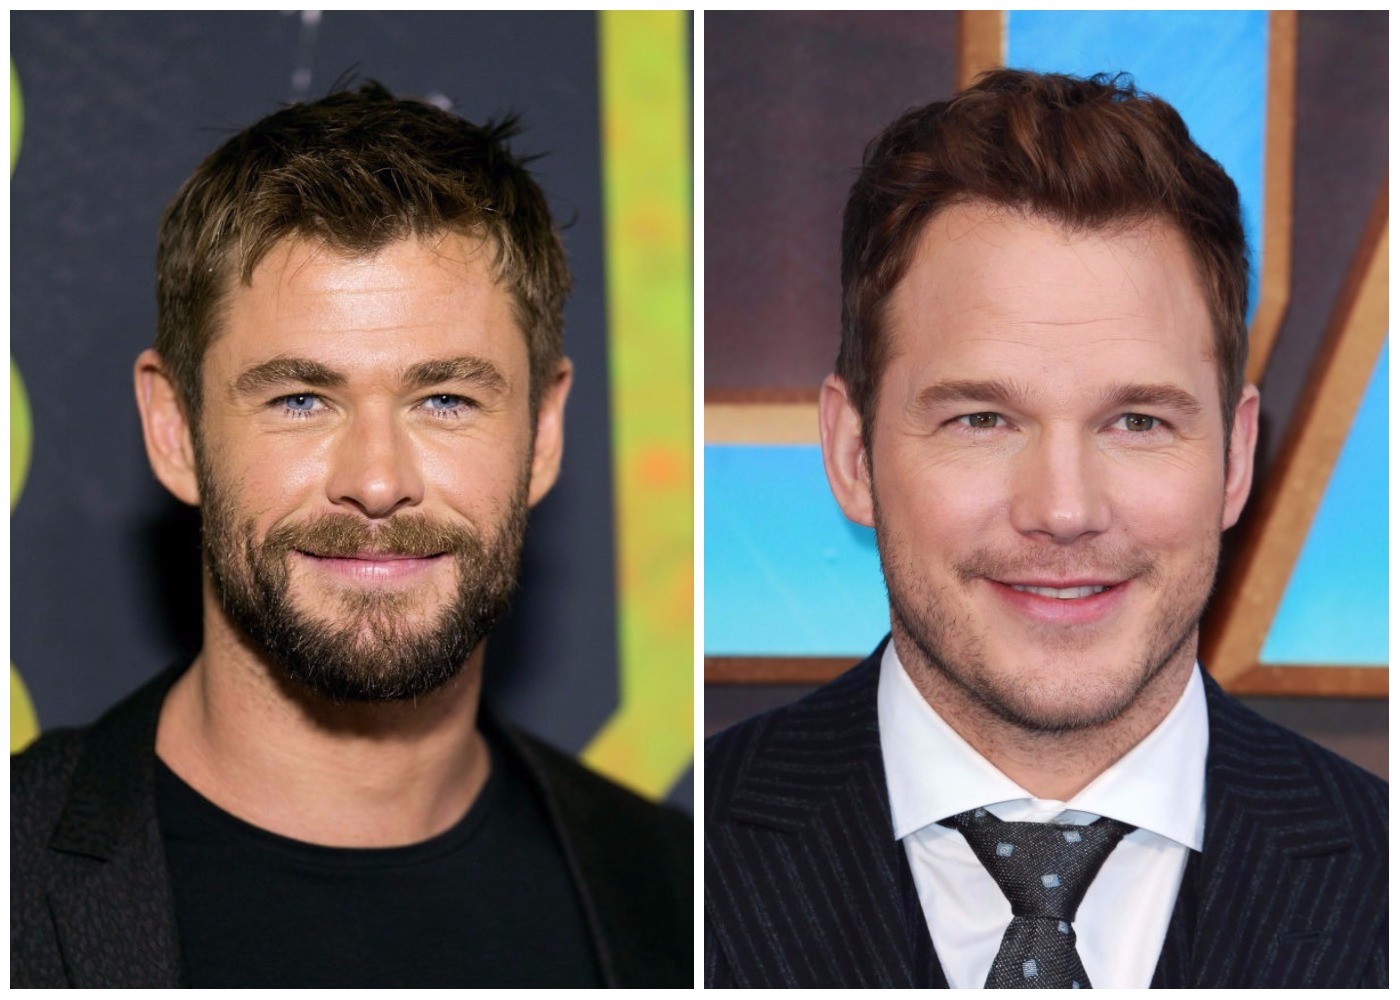 Why Chris Pratt Makes Chris Hemsworth Nervous